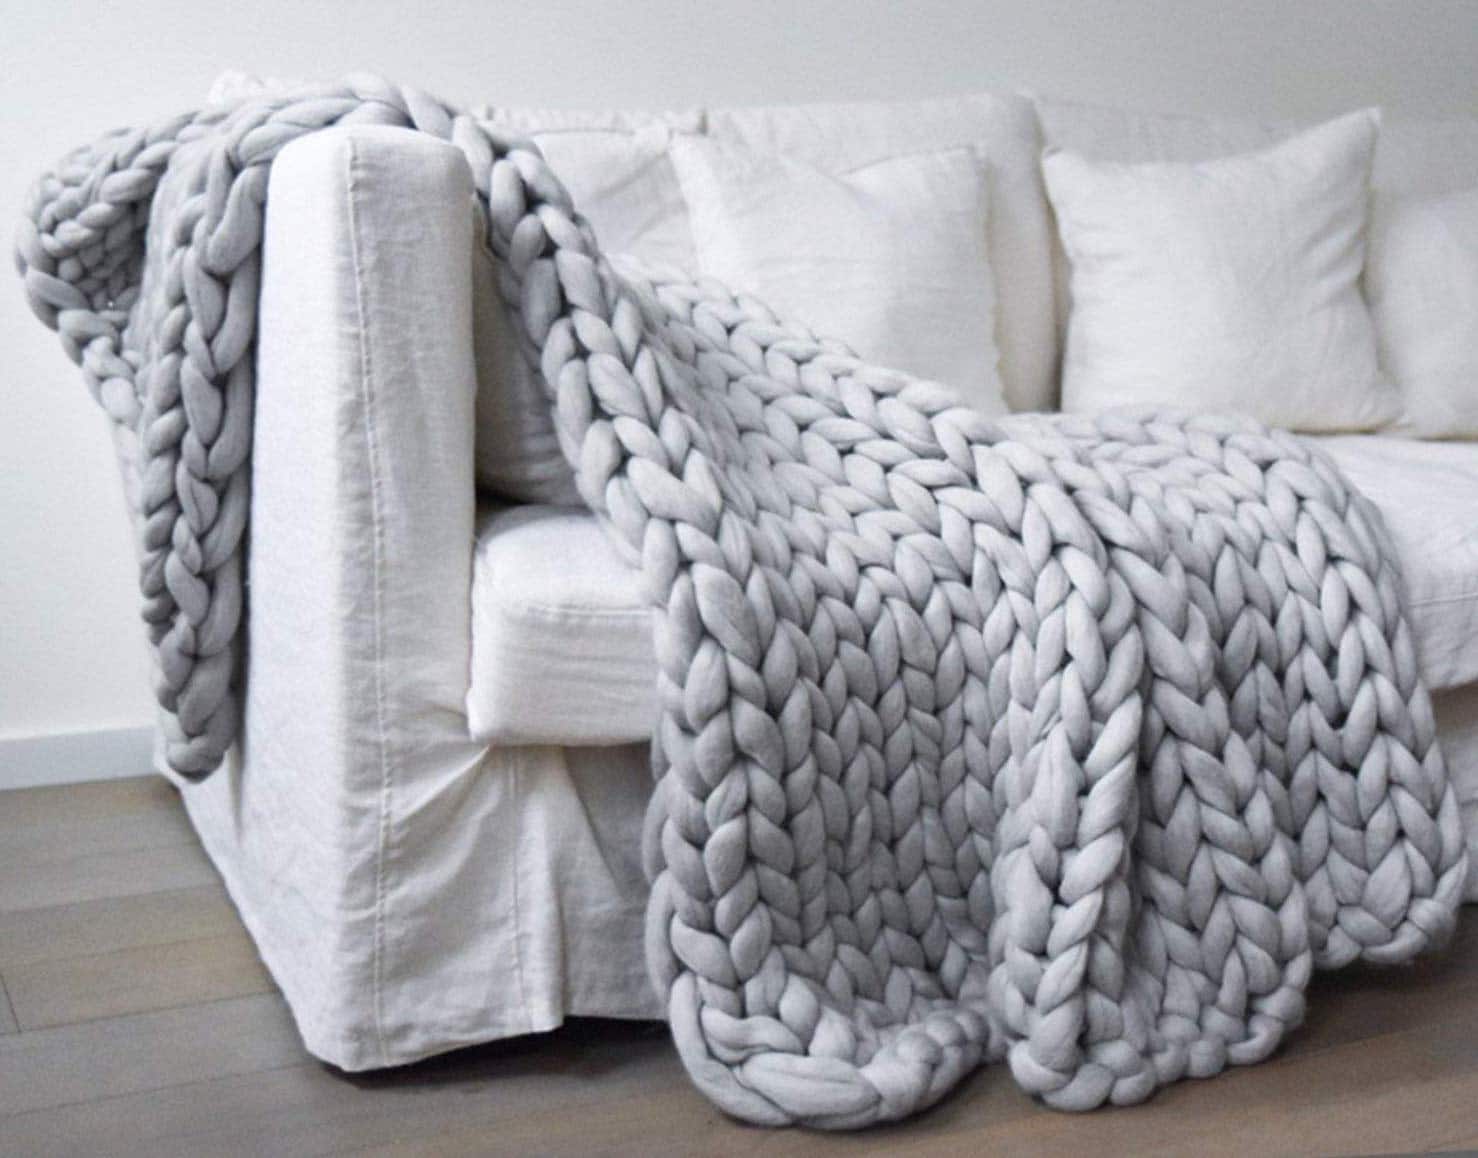 A chunky knit throw blanket